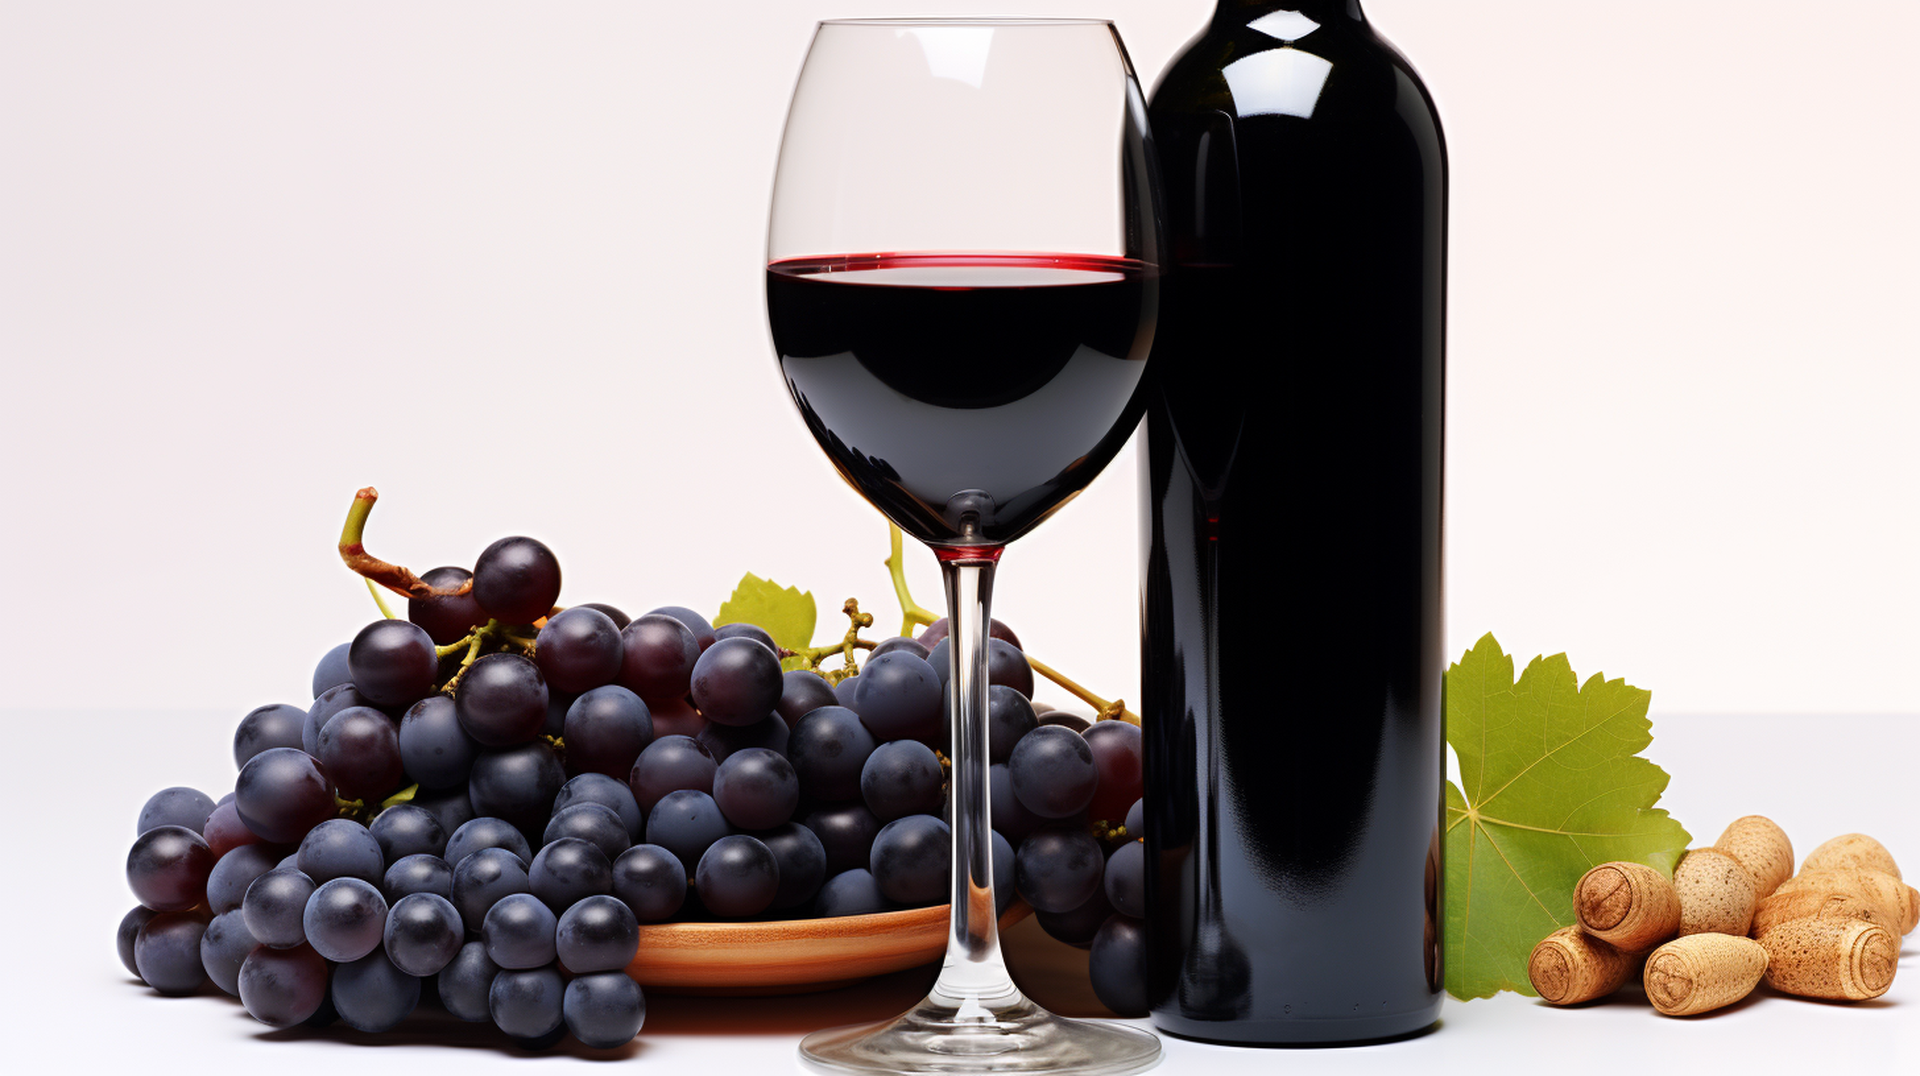 zinfandel wine image